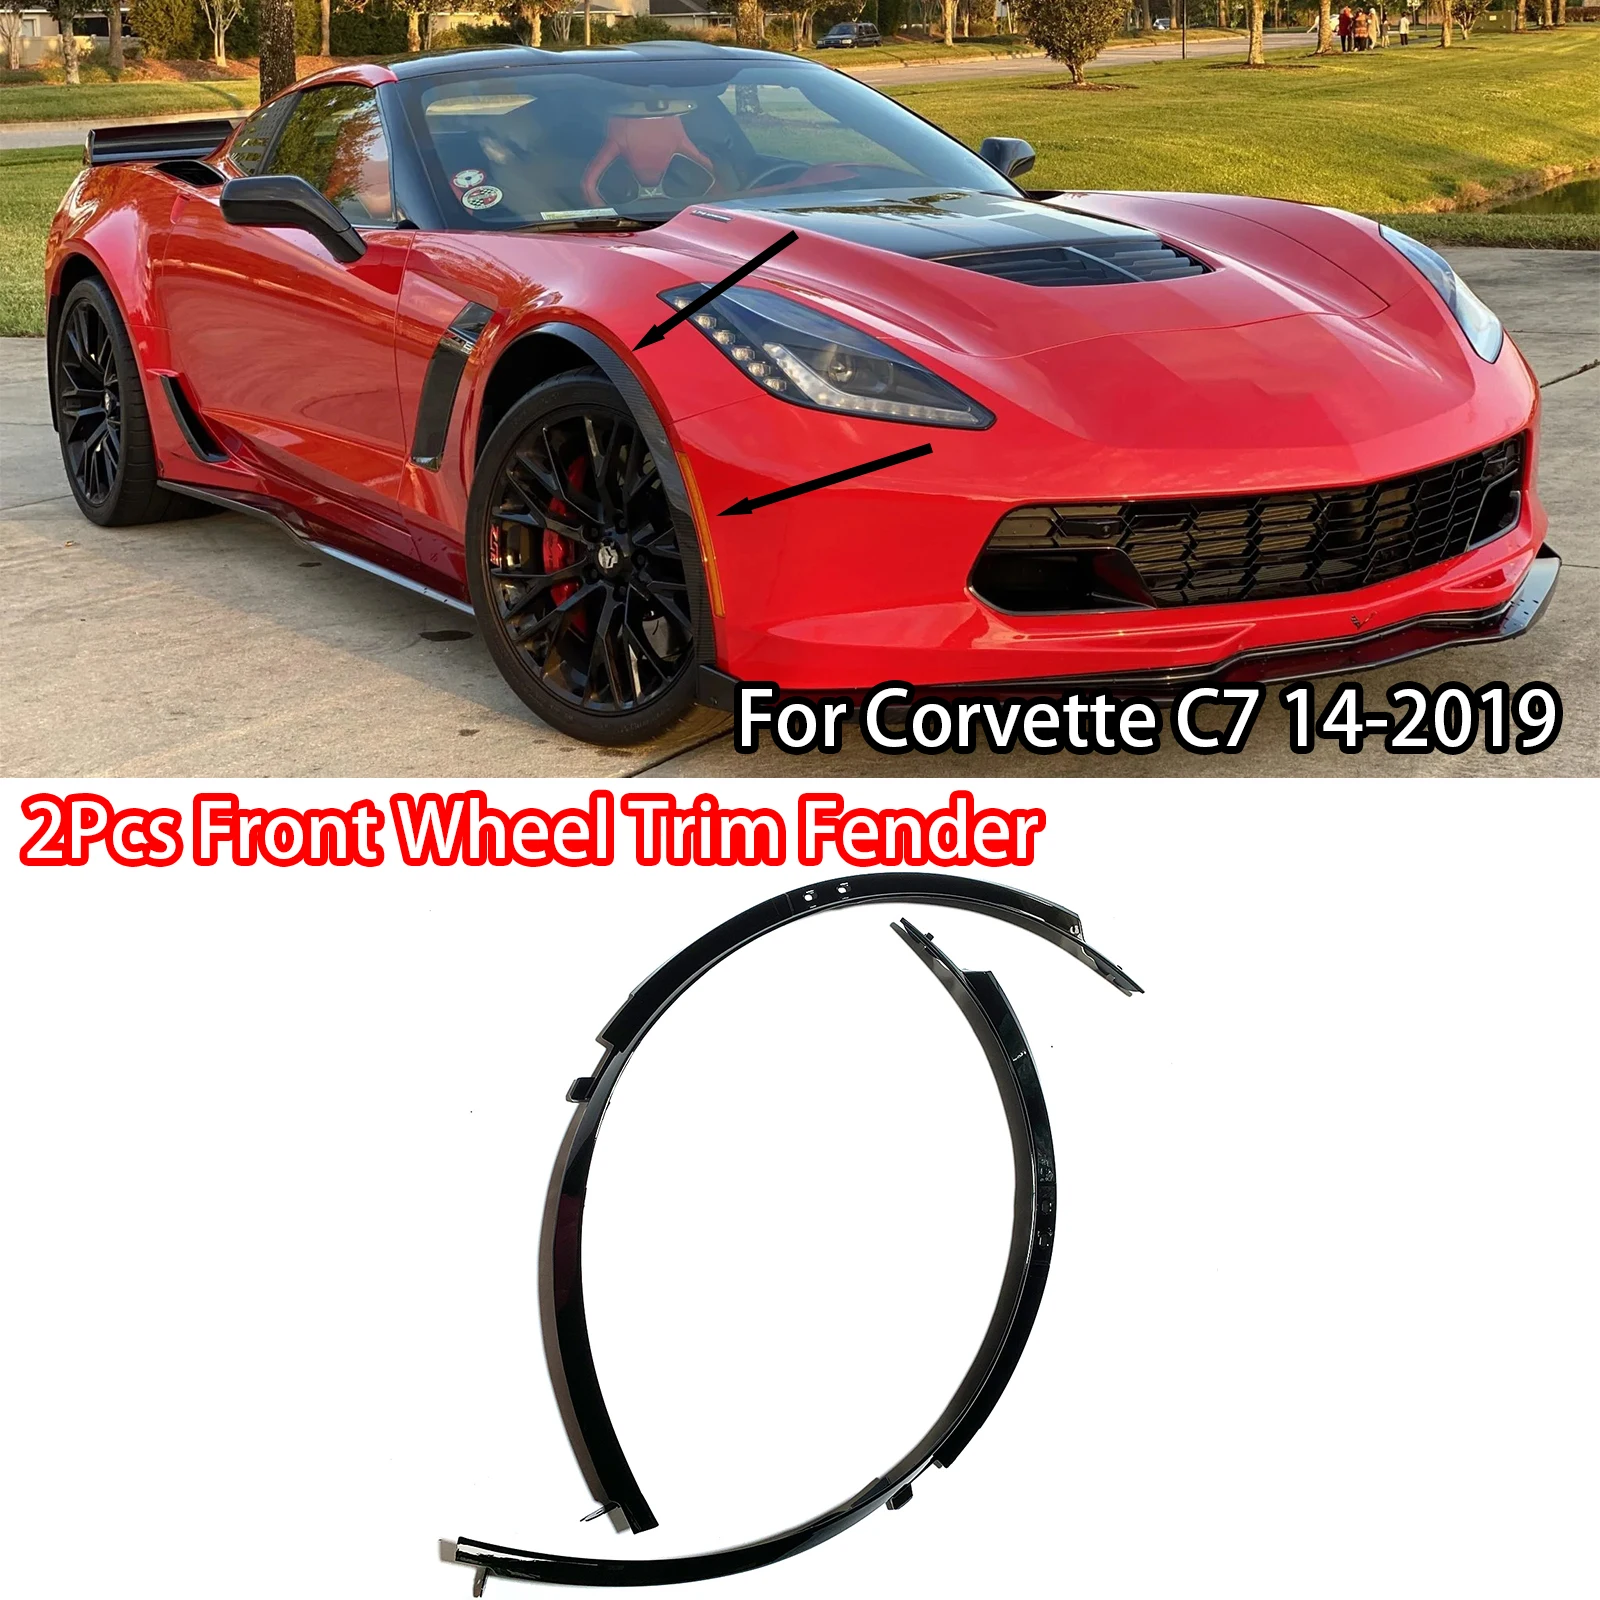 

For Corvette C7 2014-2019 2Pcs Front Wheel eyebrow Trim Fender Flares Glossy Black Carbon Fiber Look